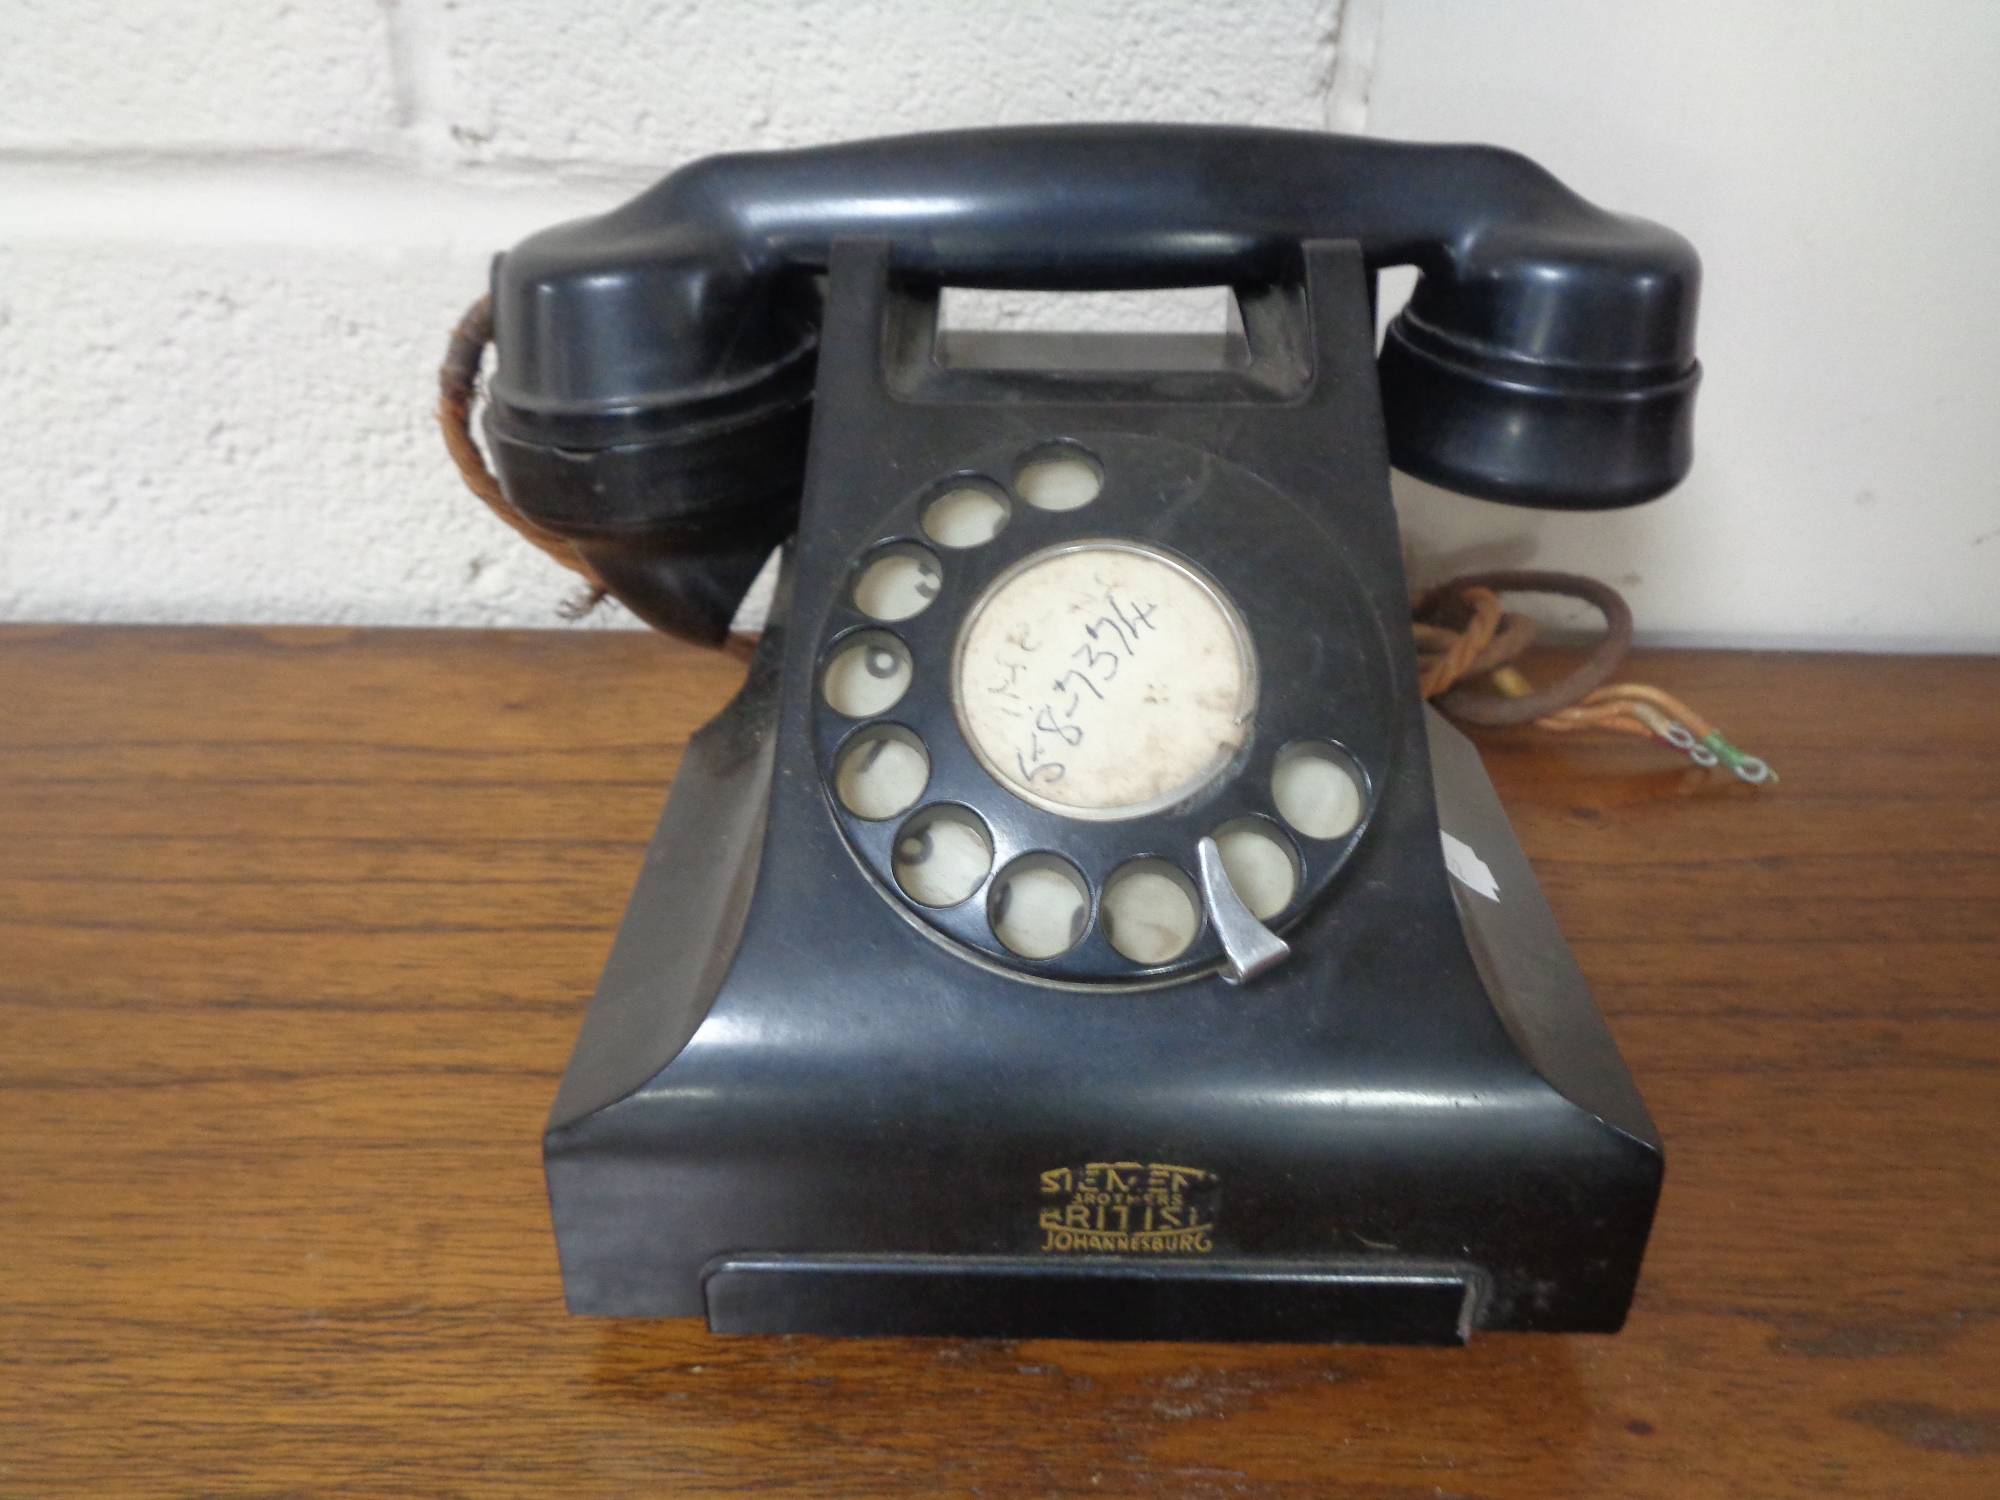 A black Bakelite cased telephone